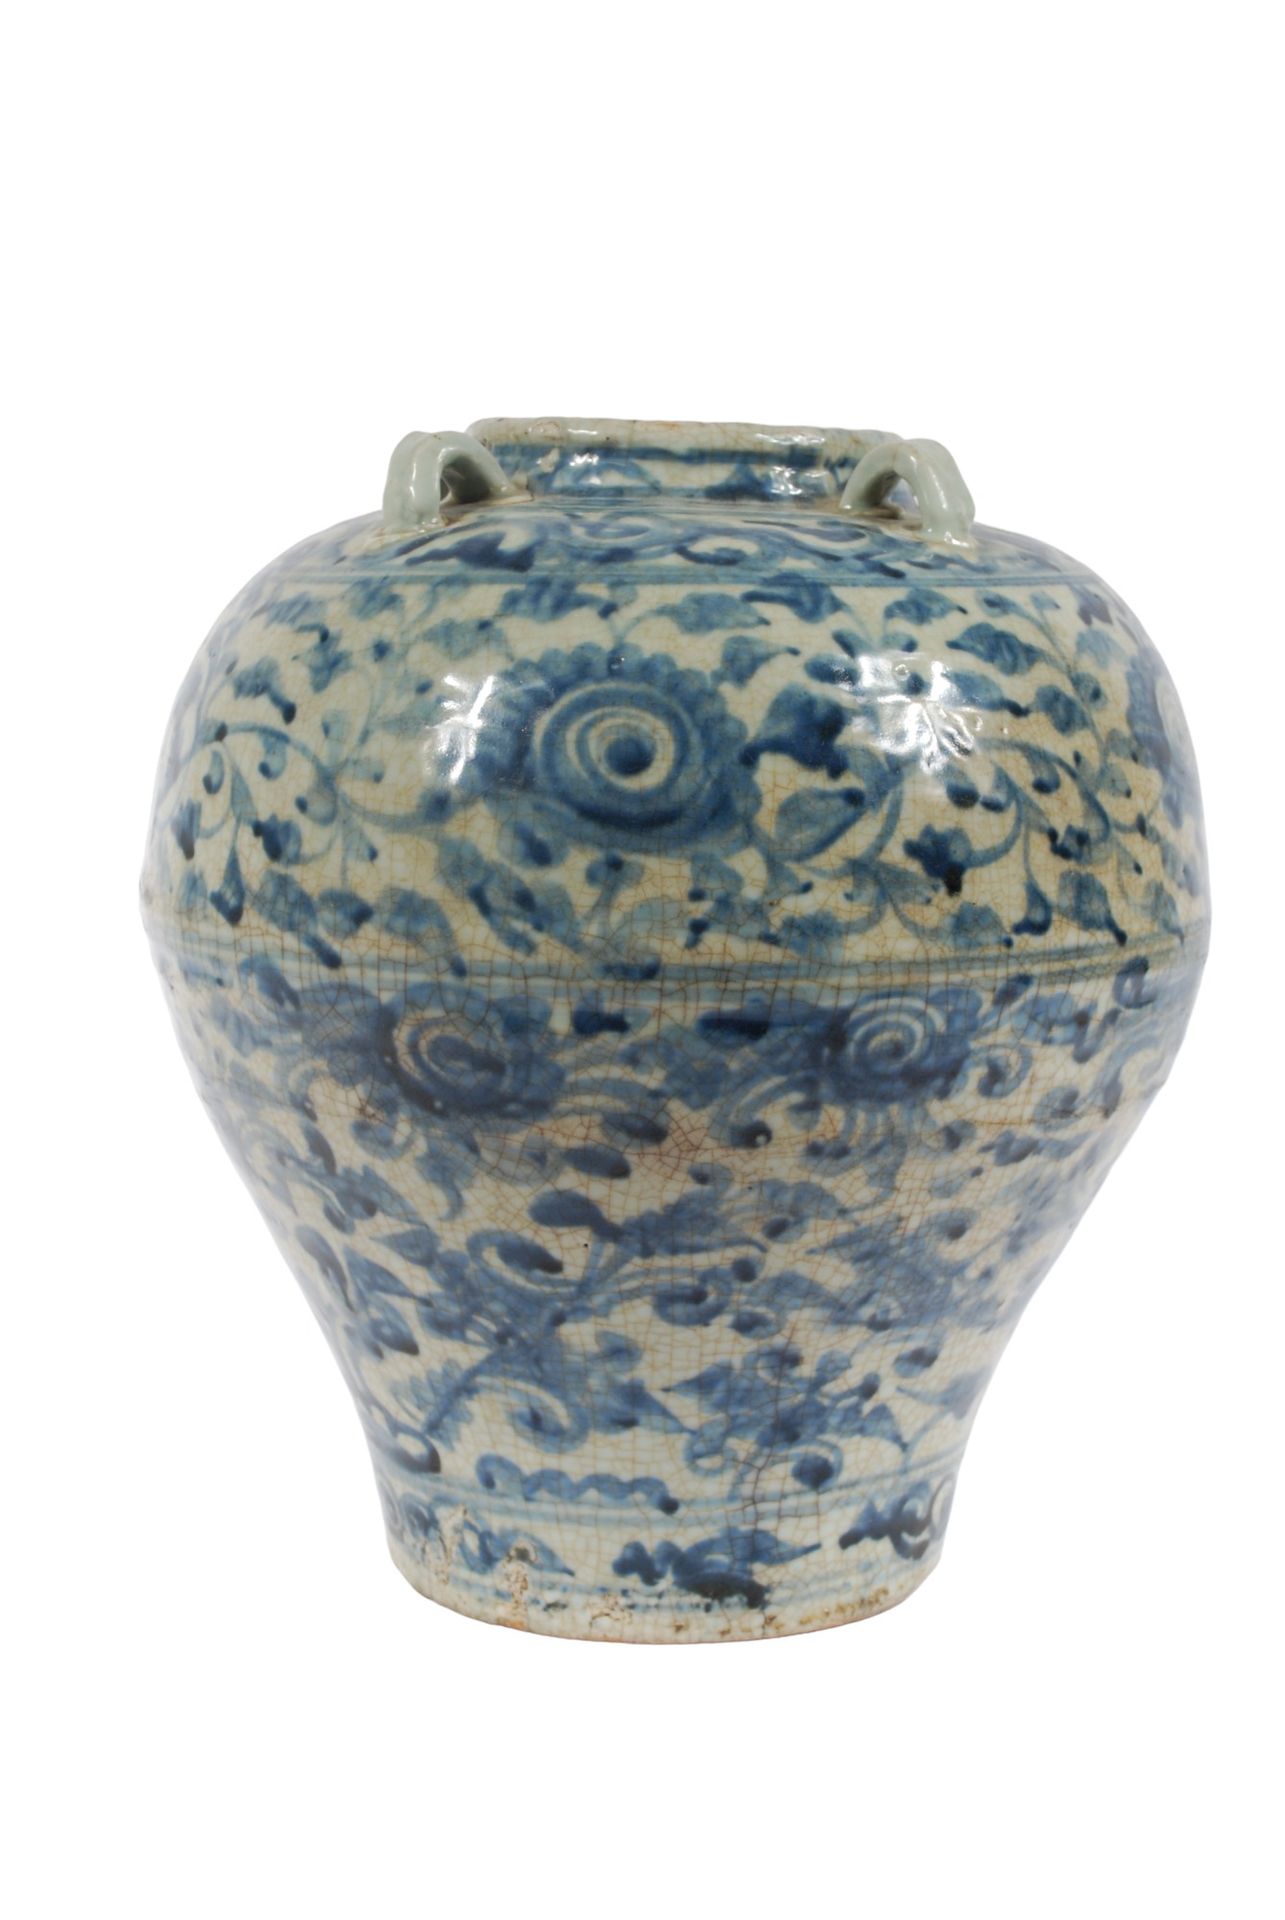 Null 地段包括。



中国或越南

釉下蓝色花纹花瓶，颈部有四个圆环 

H.33厘米

薯片



中国

釉下蓝色装饰的卵形有盖花瓶 

H.29厘米&hellip;